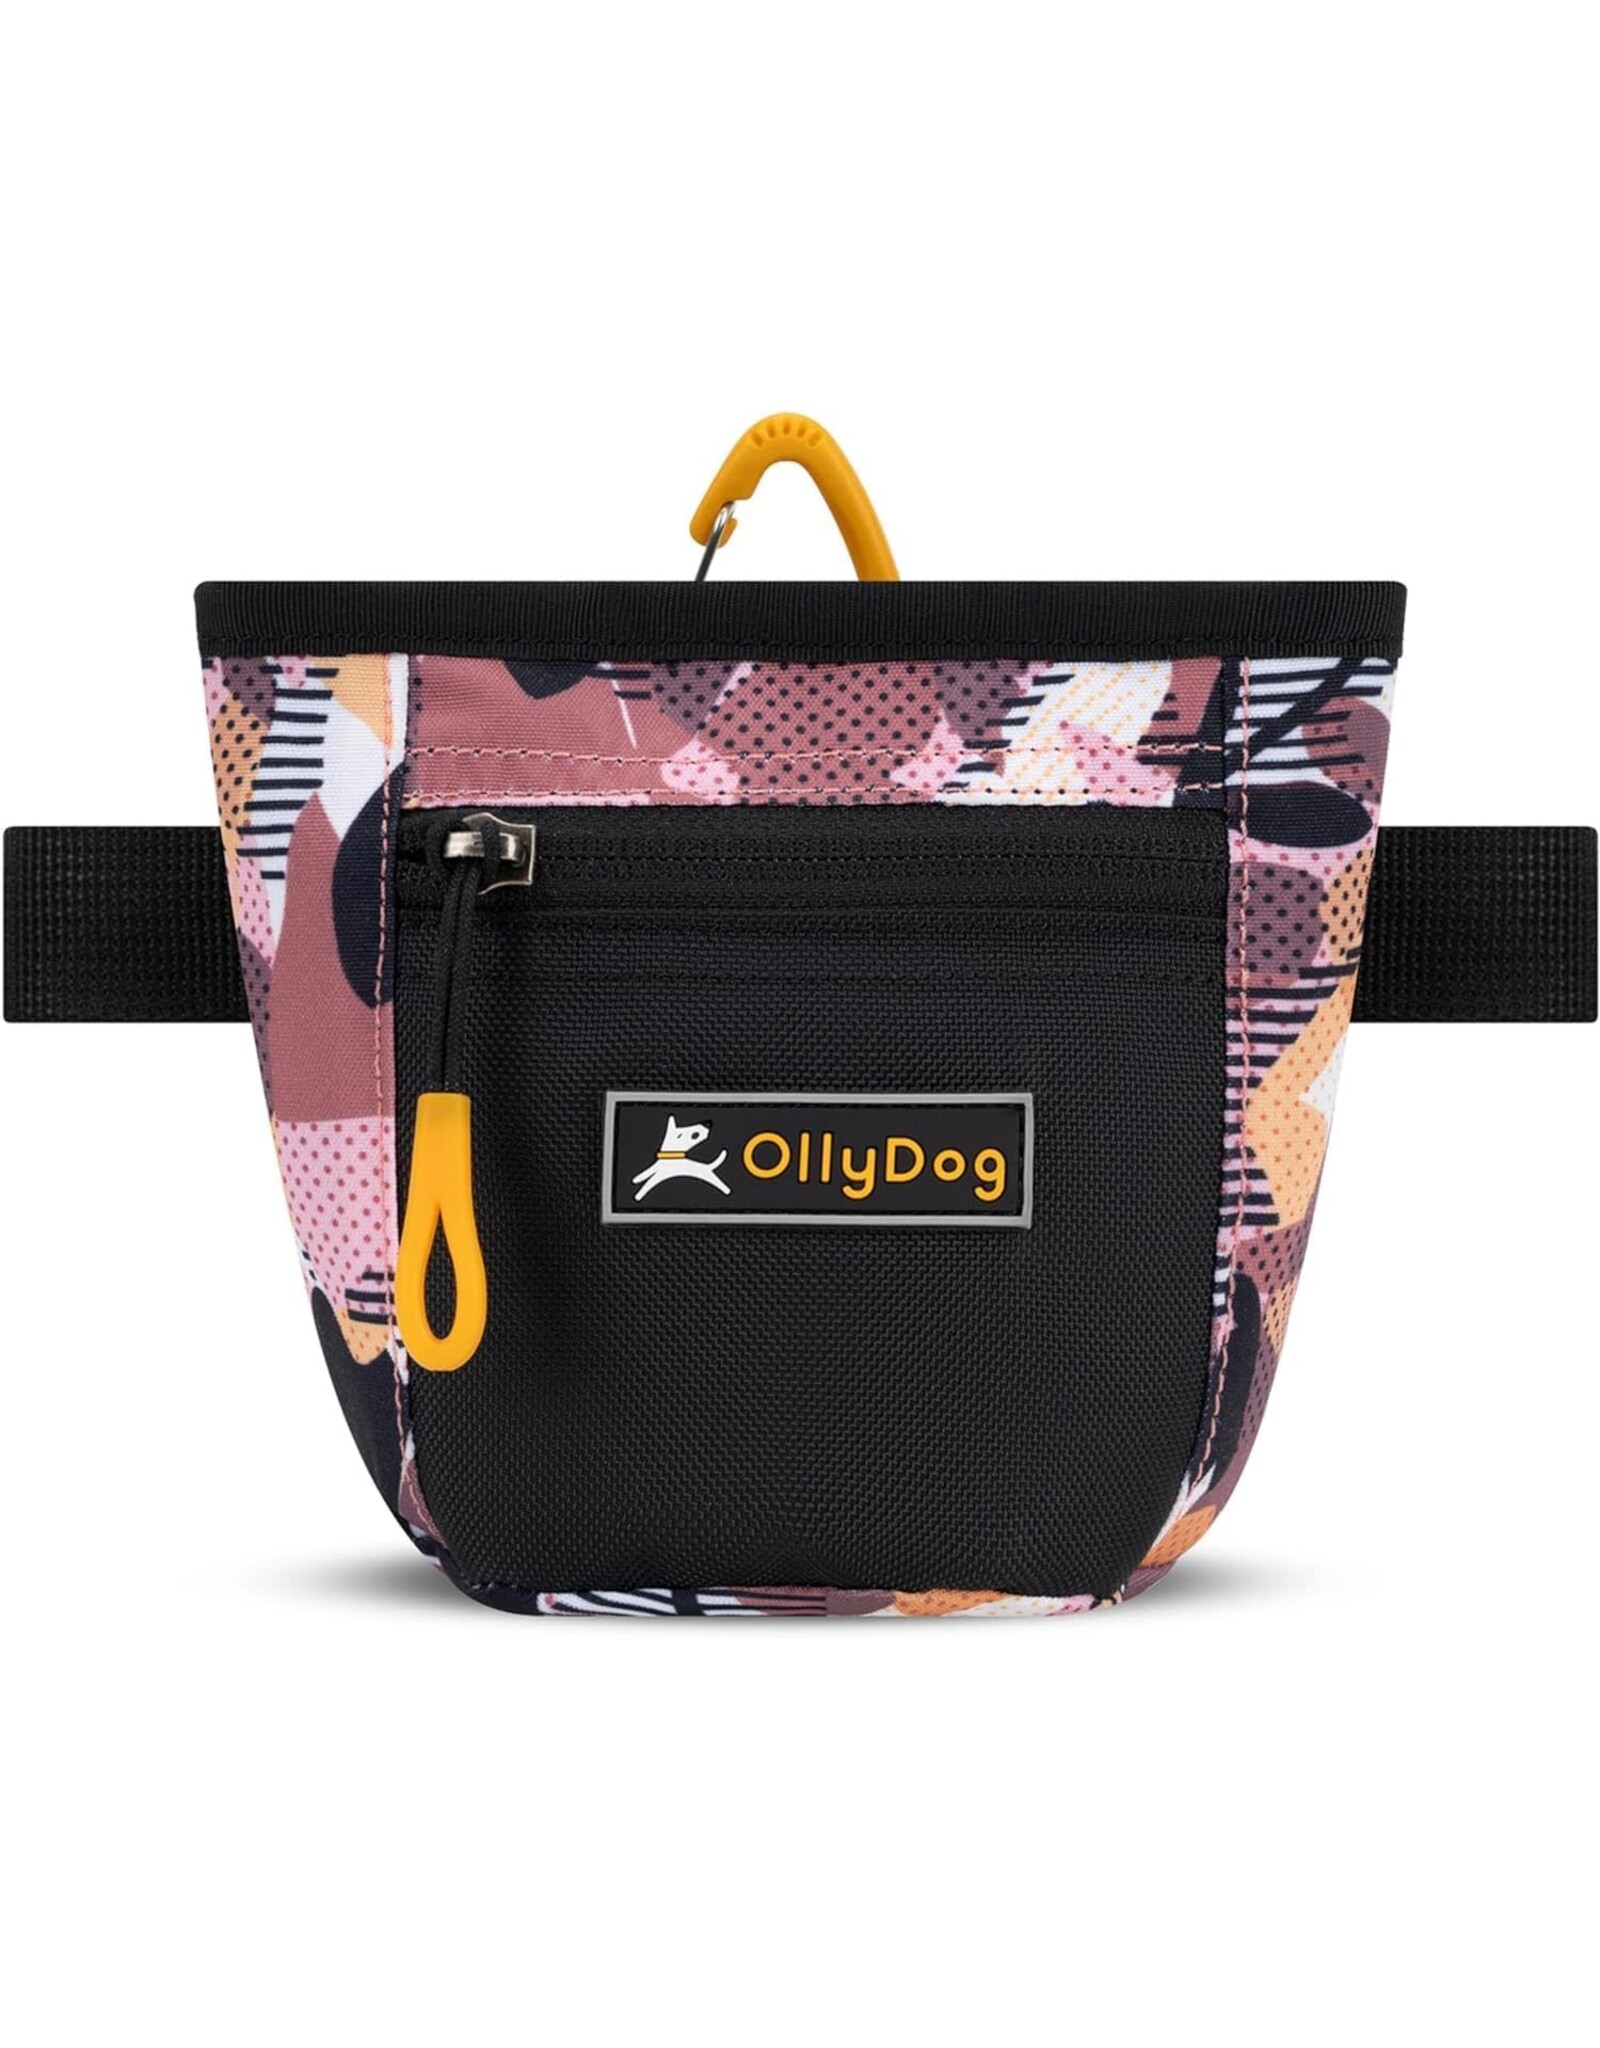 OllyDog Goodie Treat Bag: Autumn Camo, os